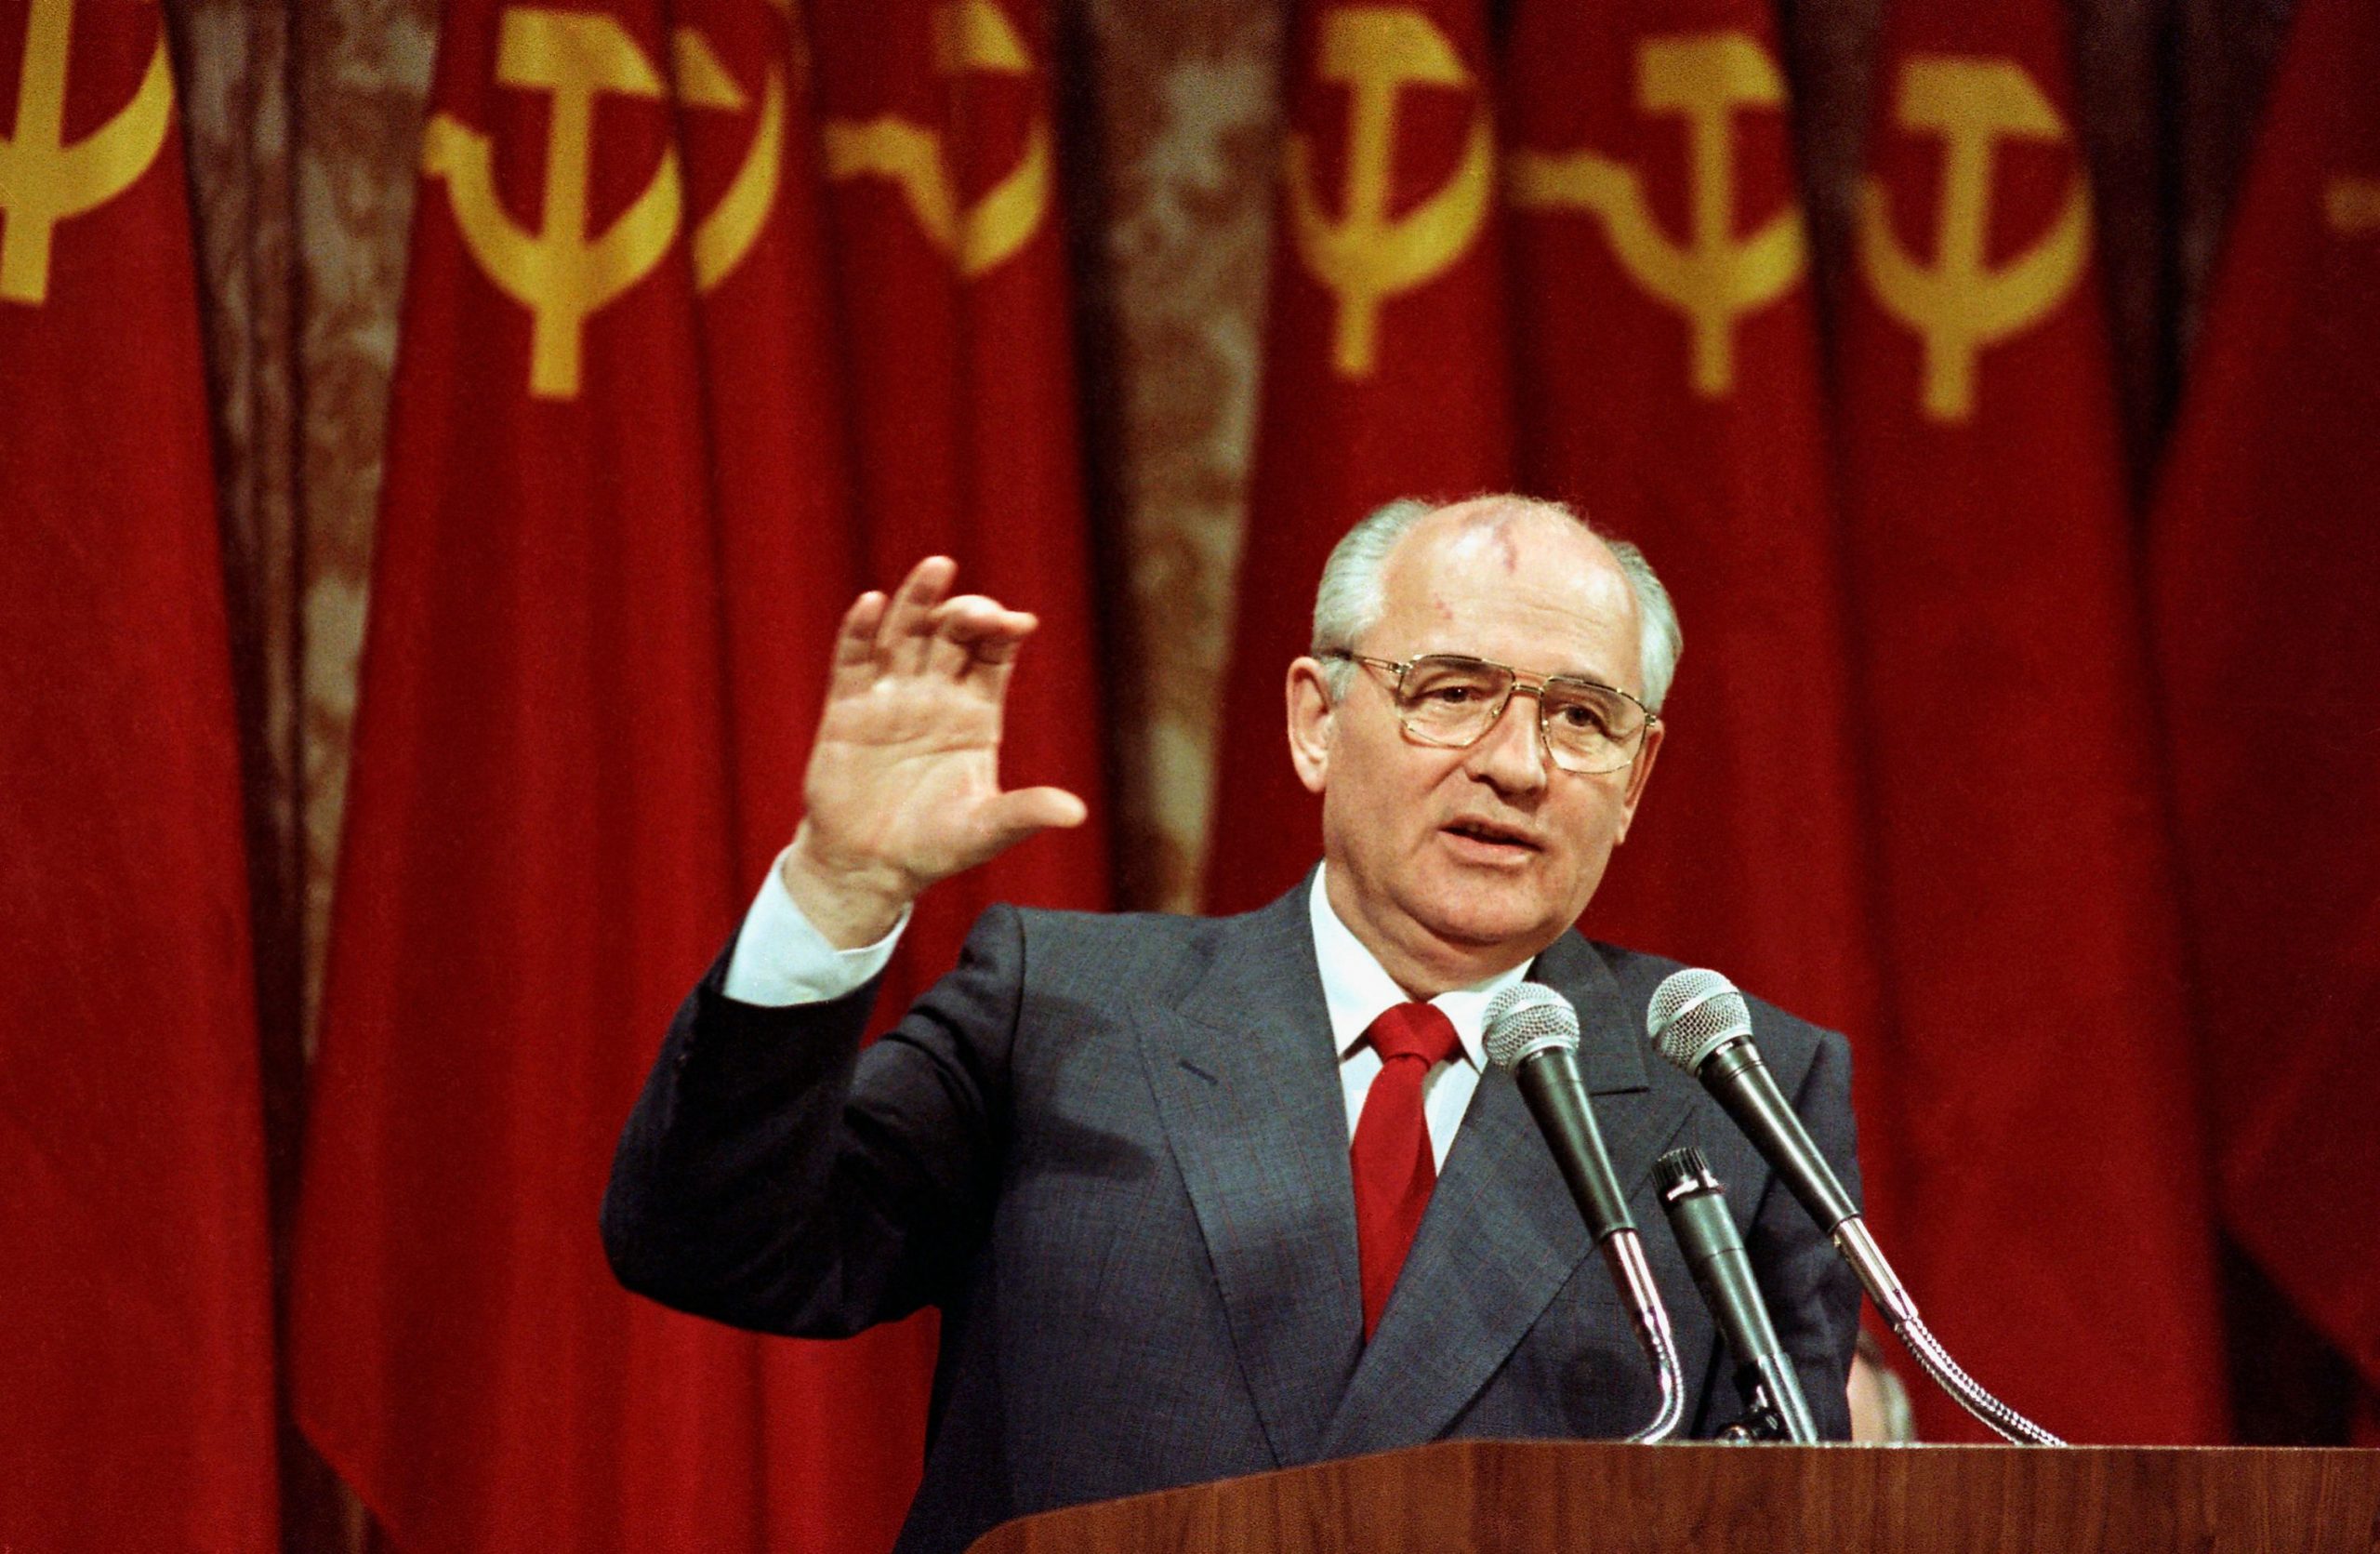 Mikhail Gorbachev was a ‘man of remarkable vision’: US President Joe Biden